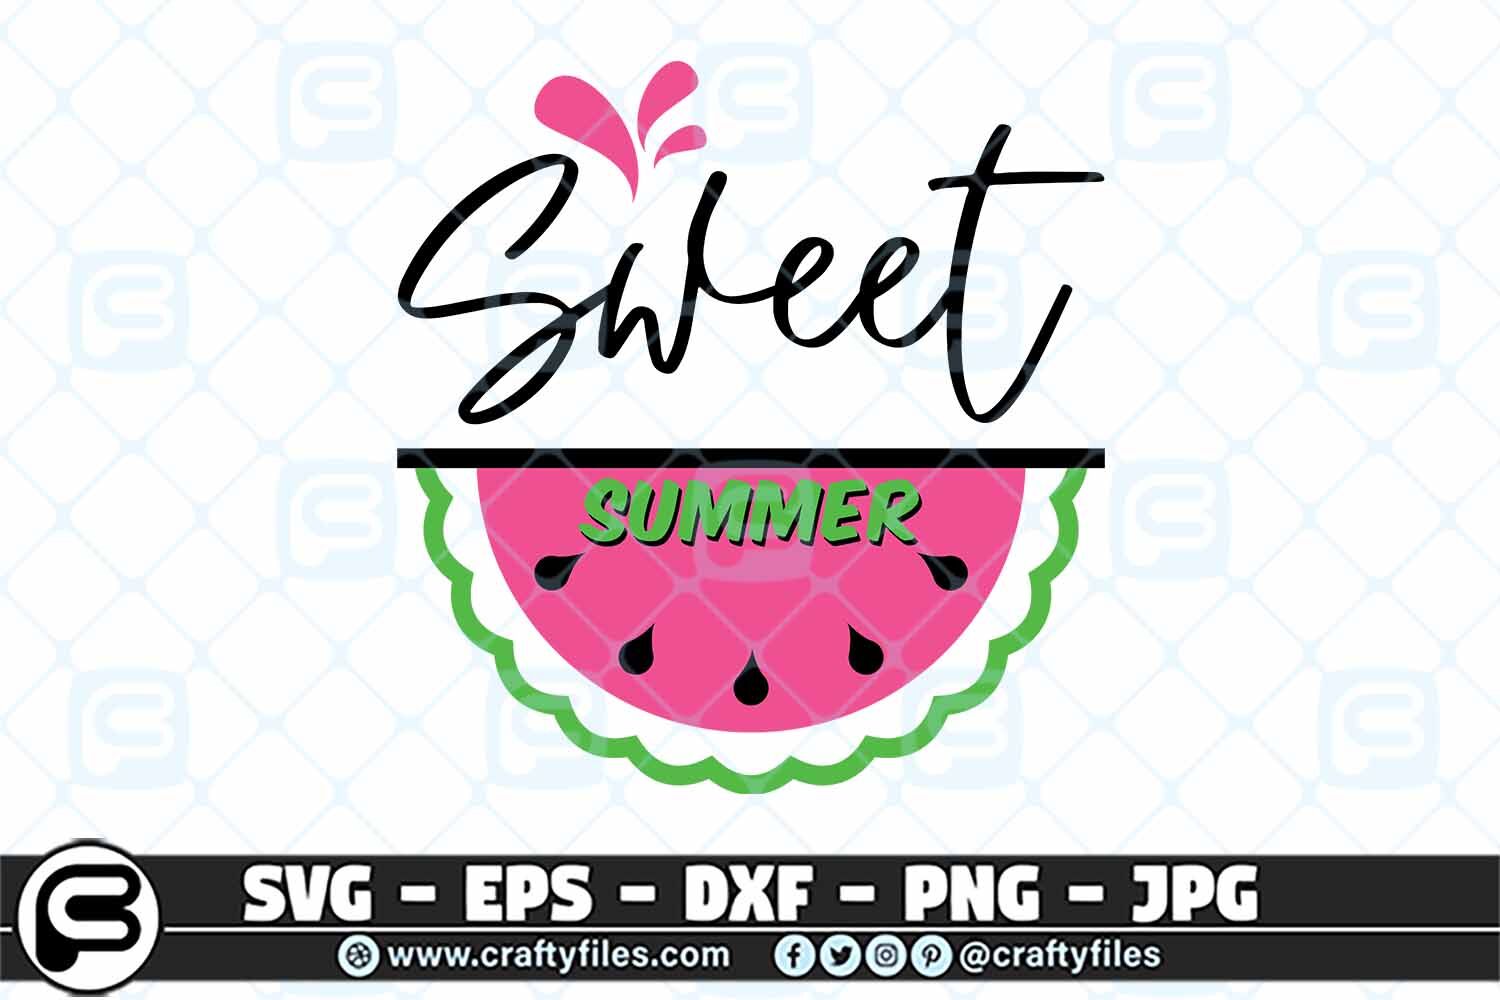 Sweet Summer Svg Hello Summer Svg Beach Time Svg By Crafty Files Thehungryjpeg Com